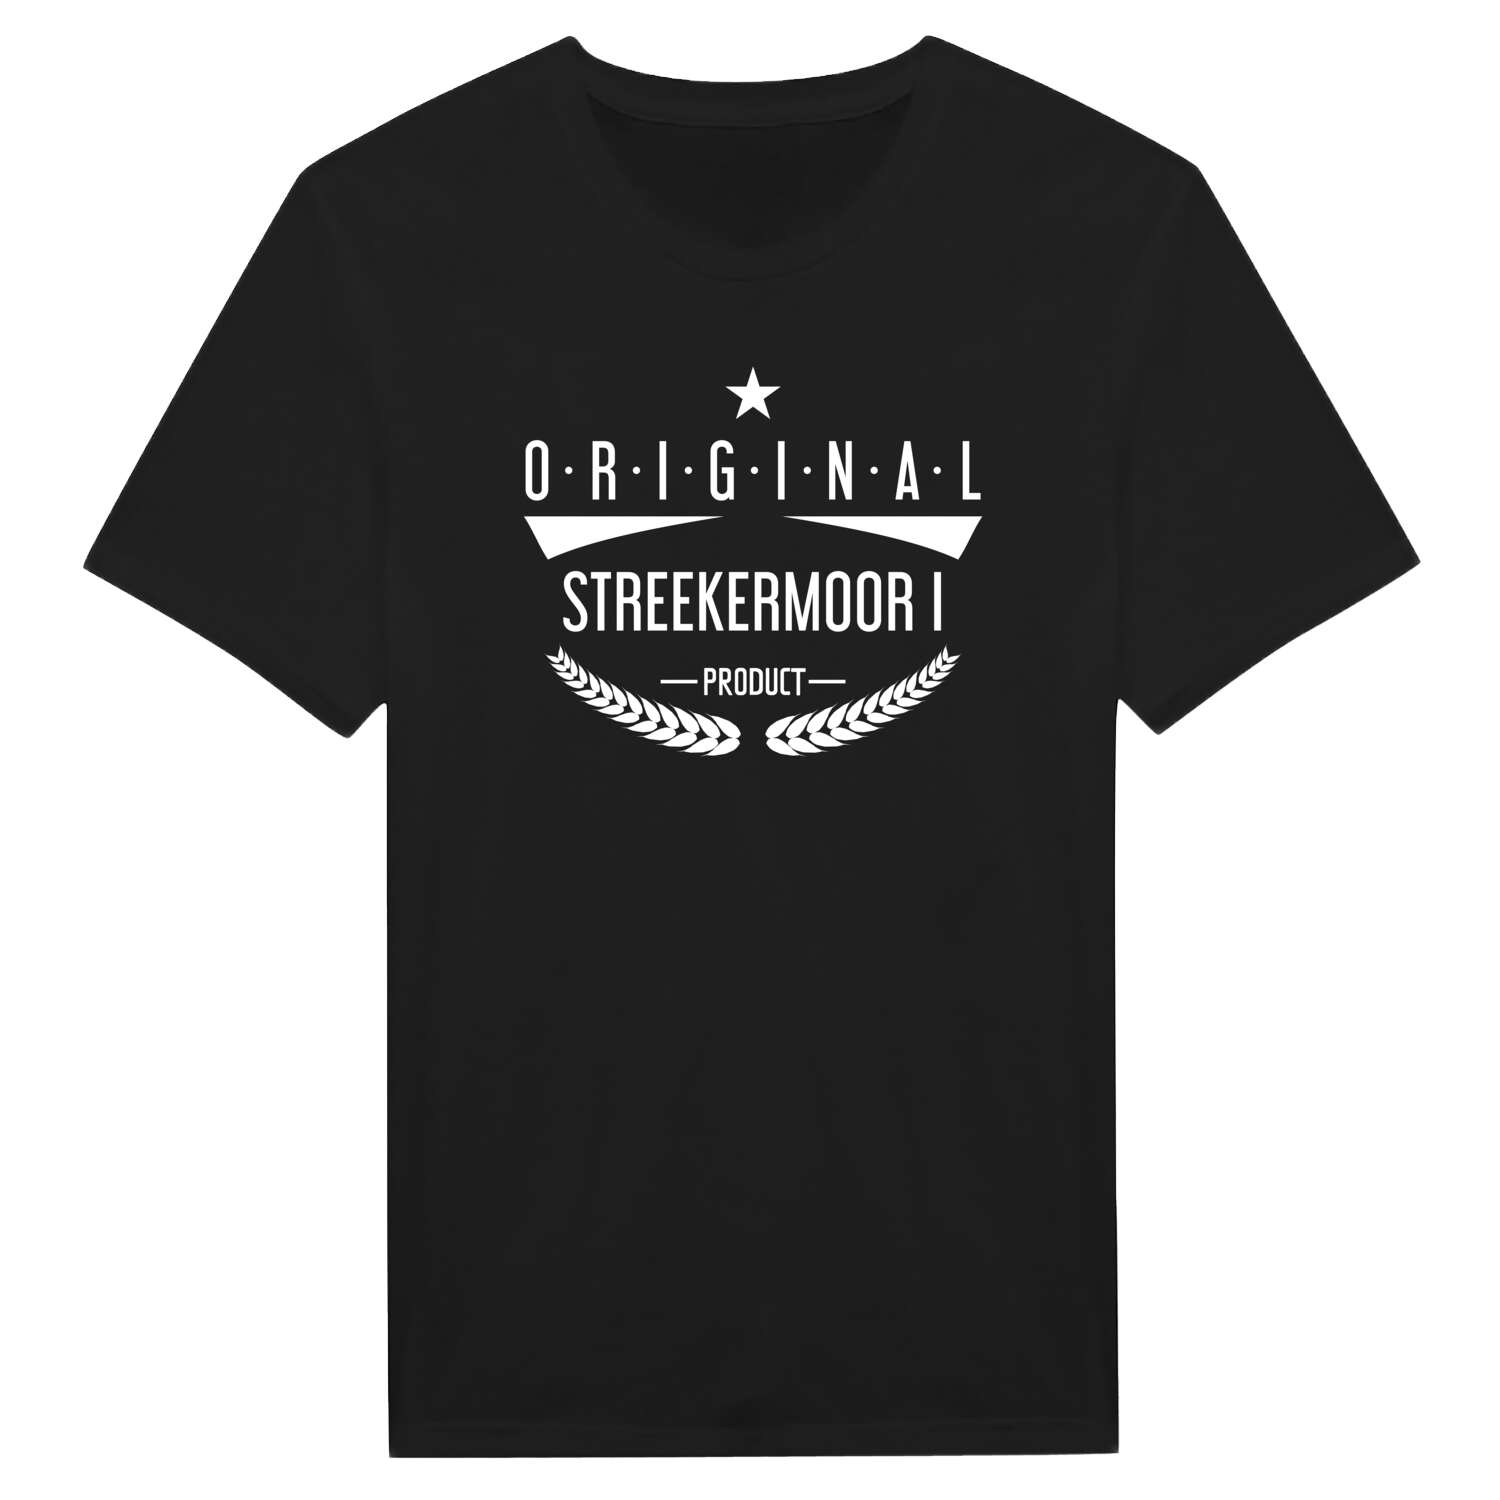 Streekermoor I T-Shirt »Original Product«